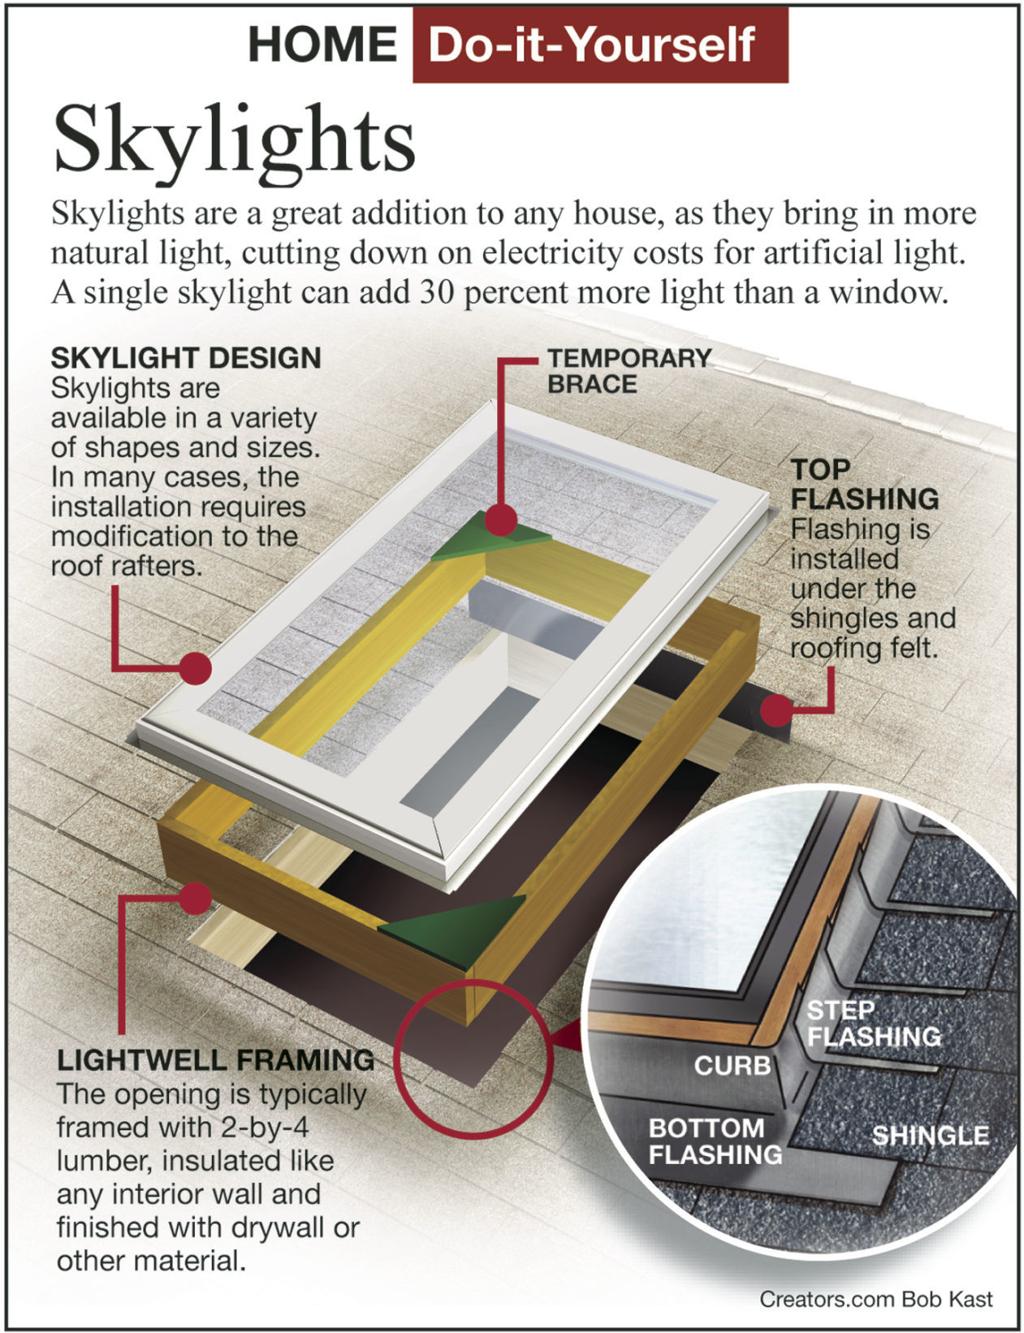 Properly Build A Curb And Flash A Skylight Siouxland Homes Siouxcityjournal Com